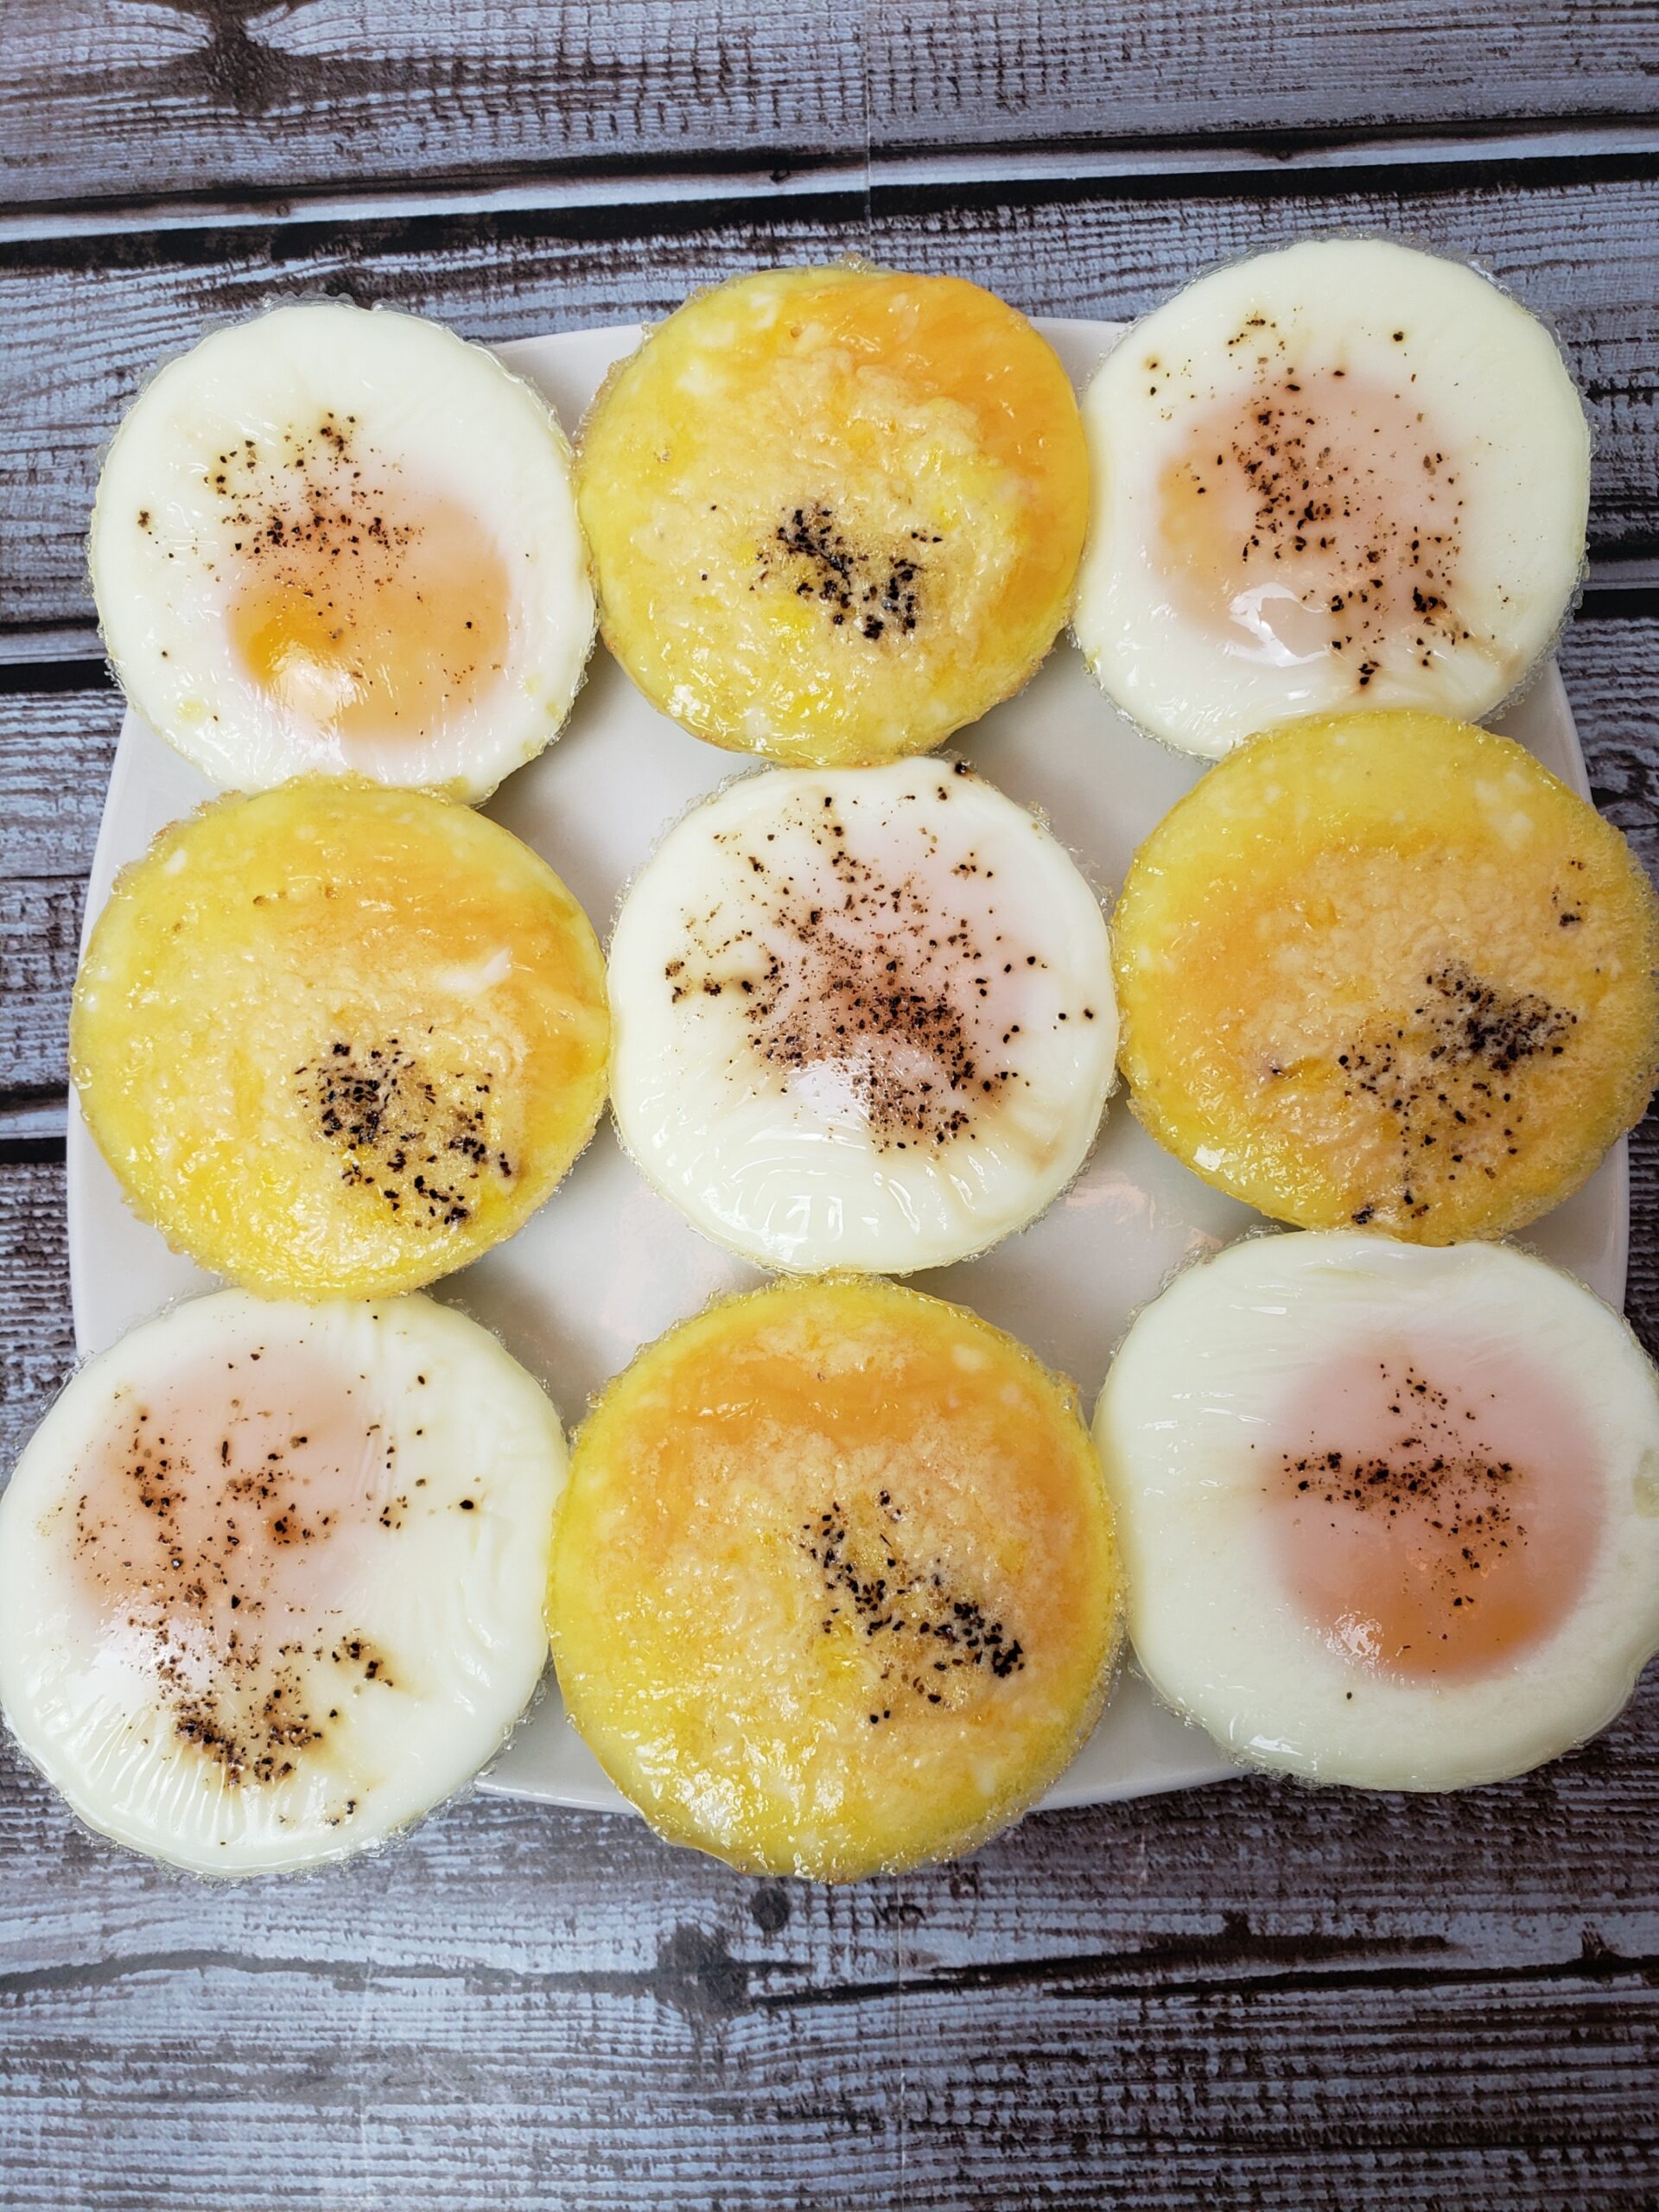 9 Oven Baked Eggs on white plate